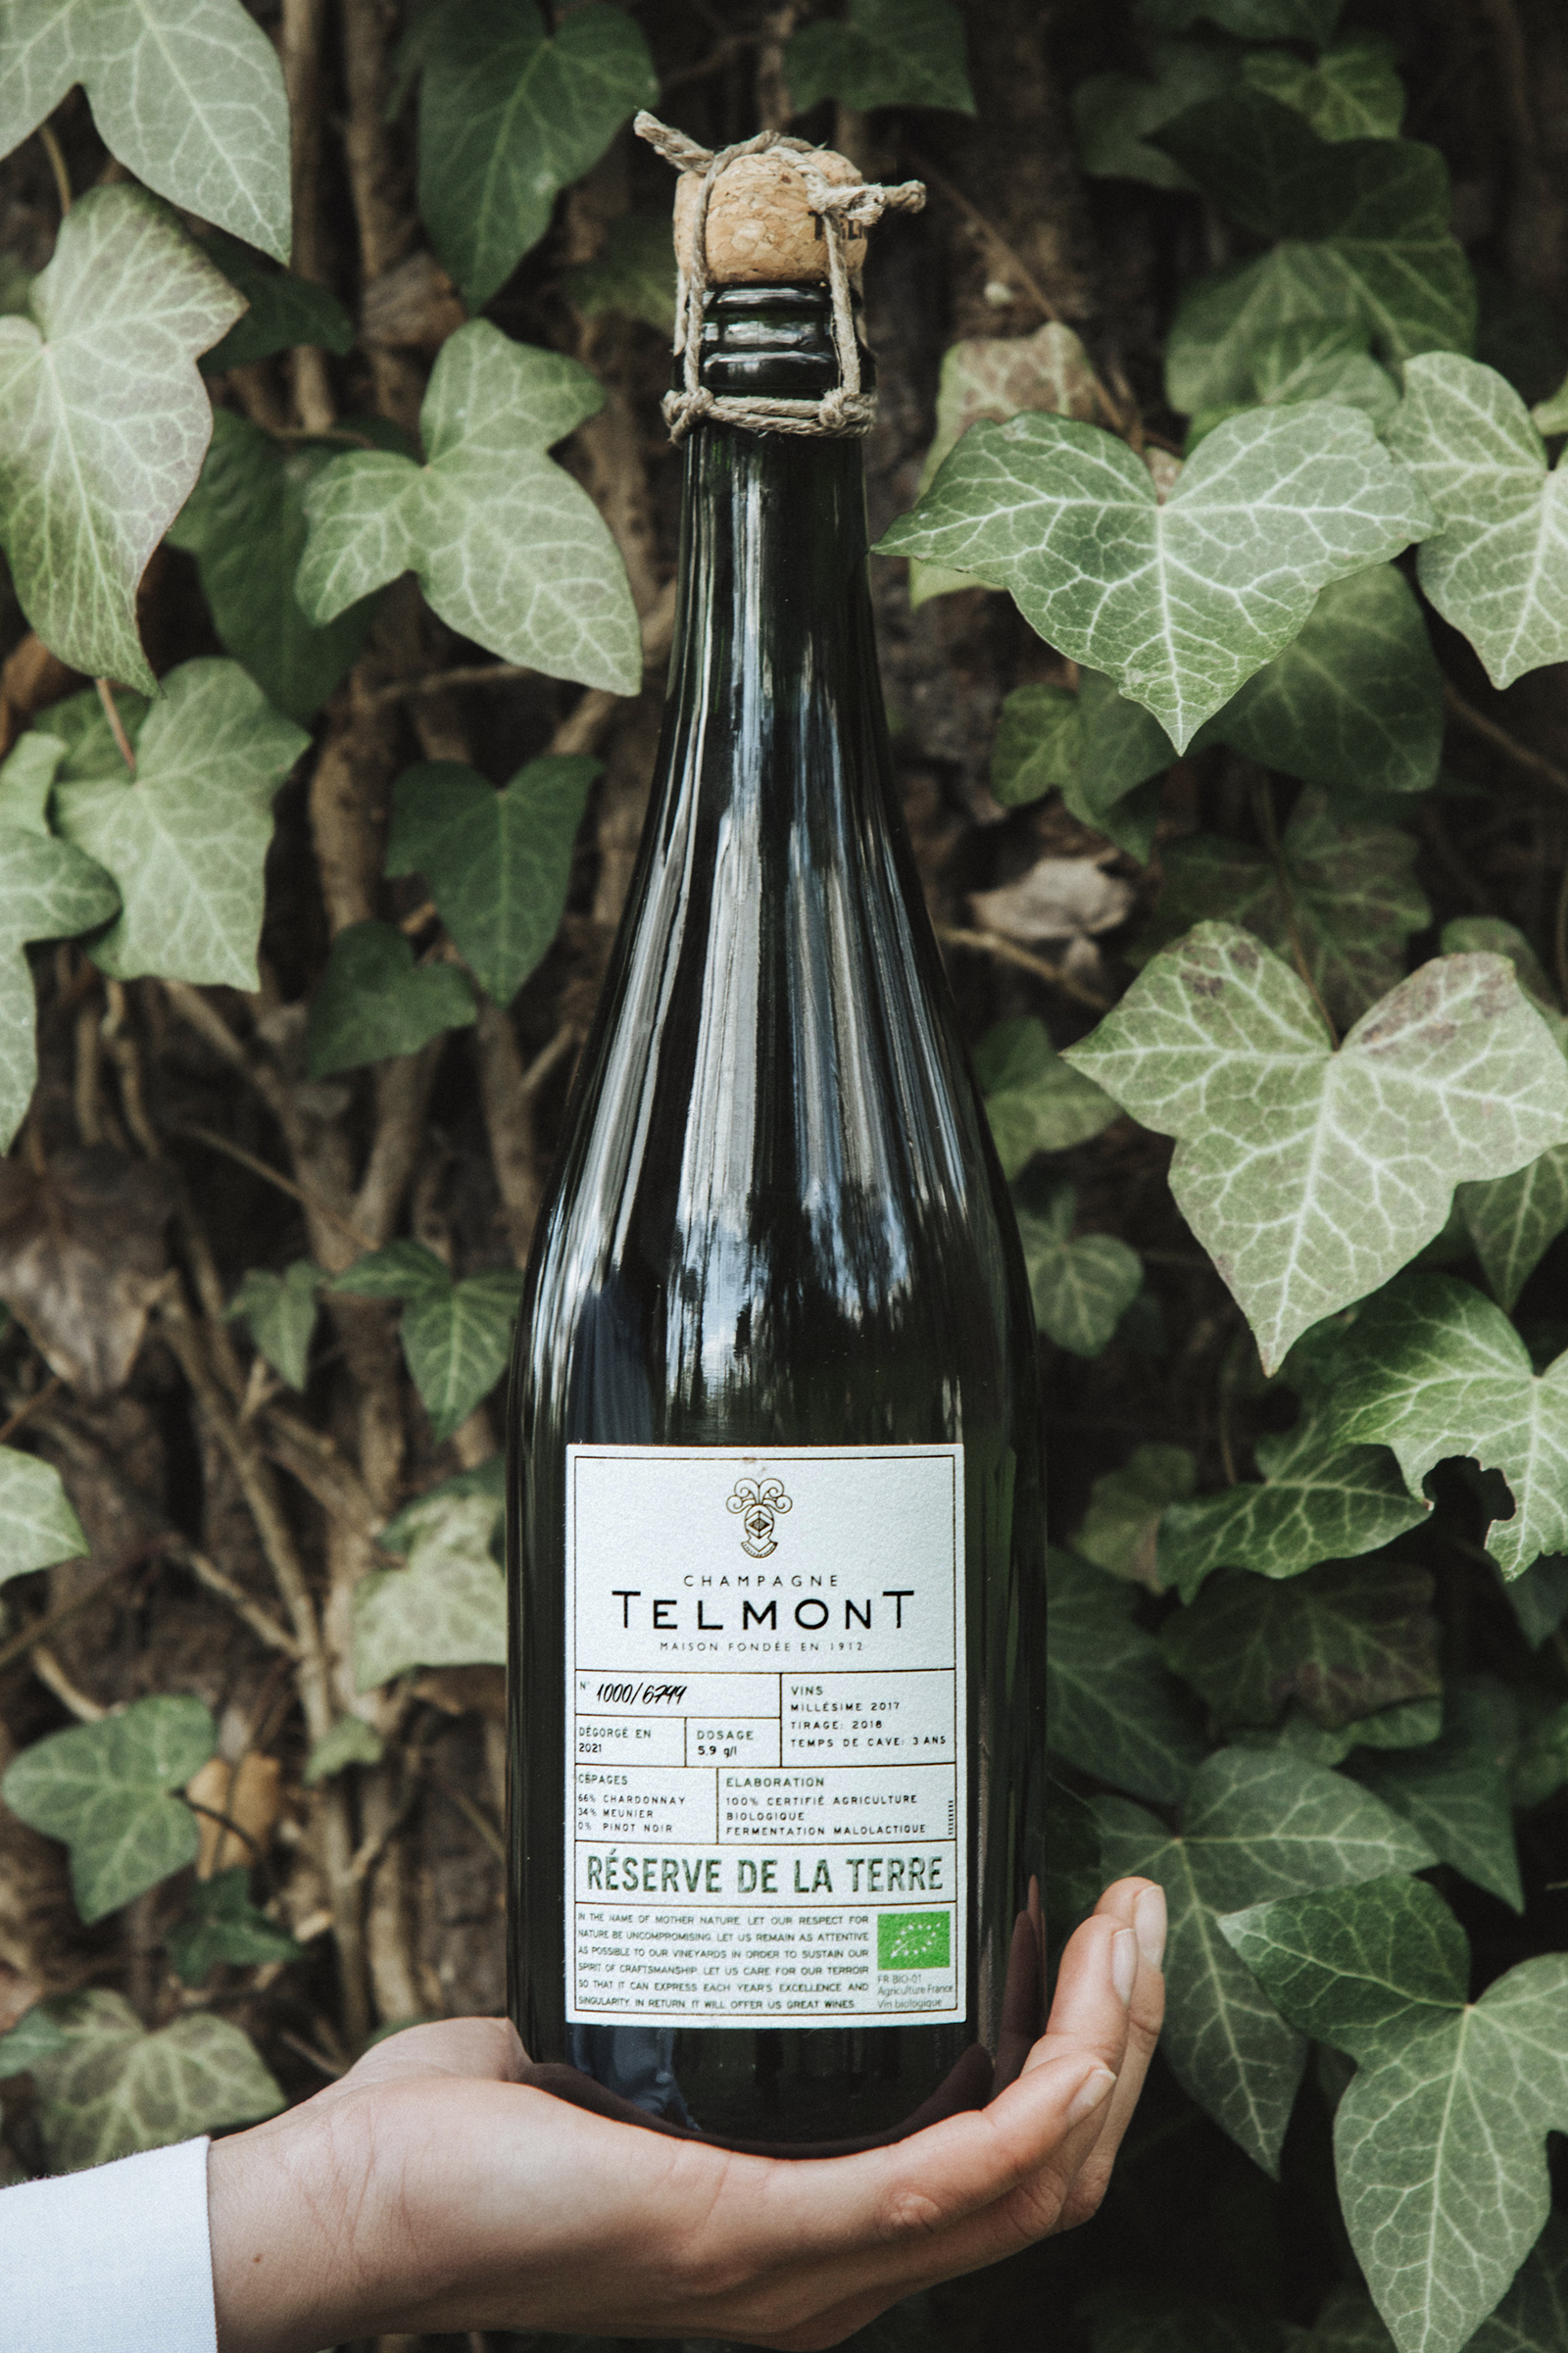 Champagne Telmont light weight glass bottle